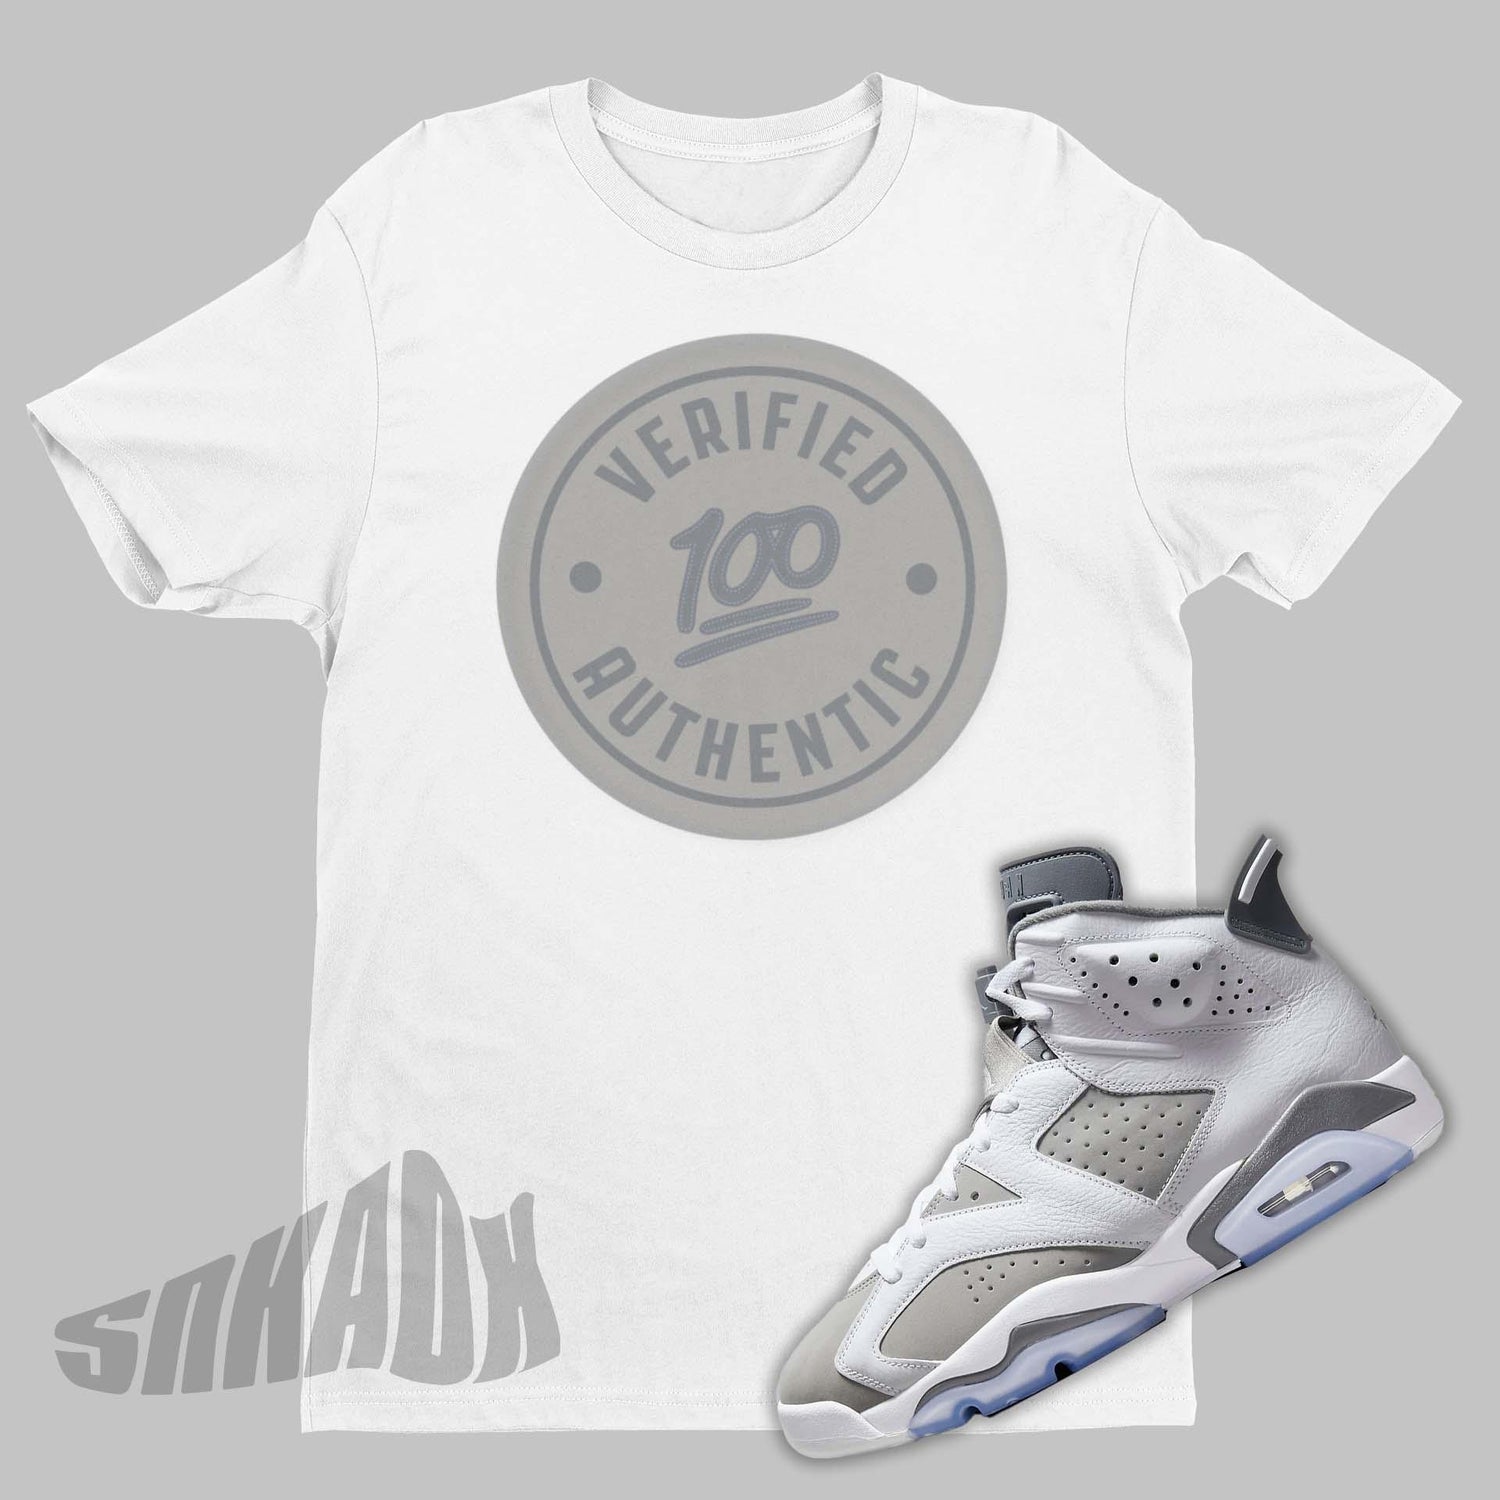 Air Jordan 6 Cool Grey matching shirt